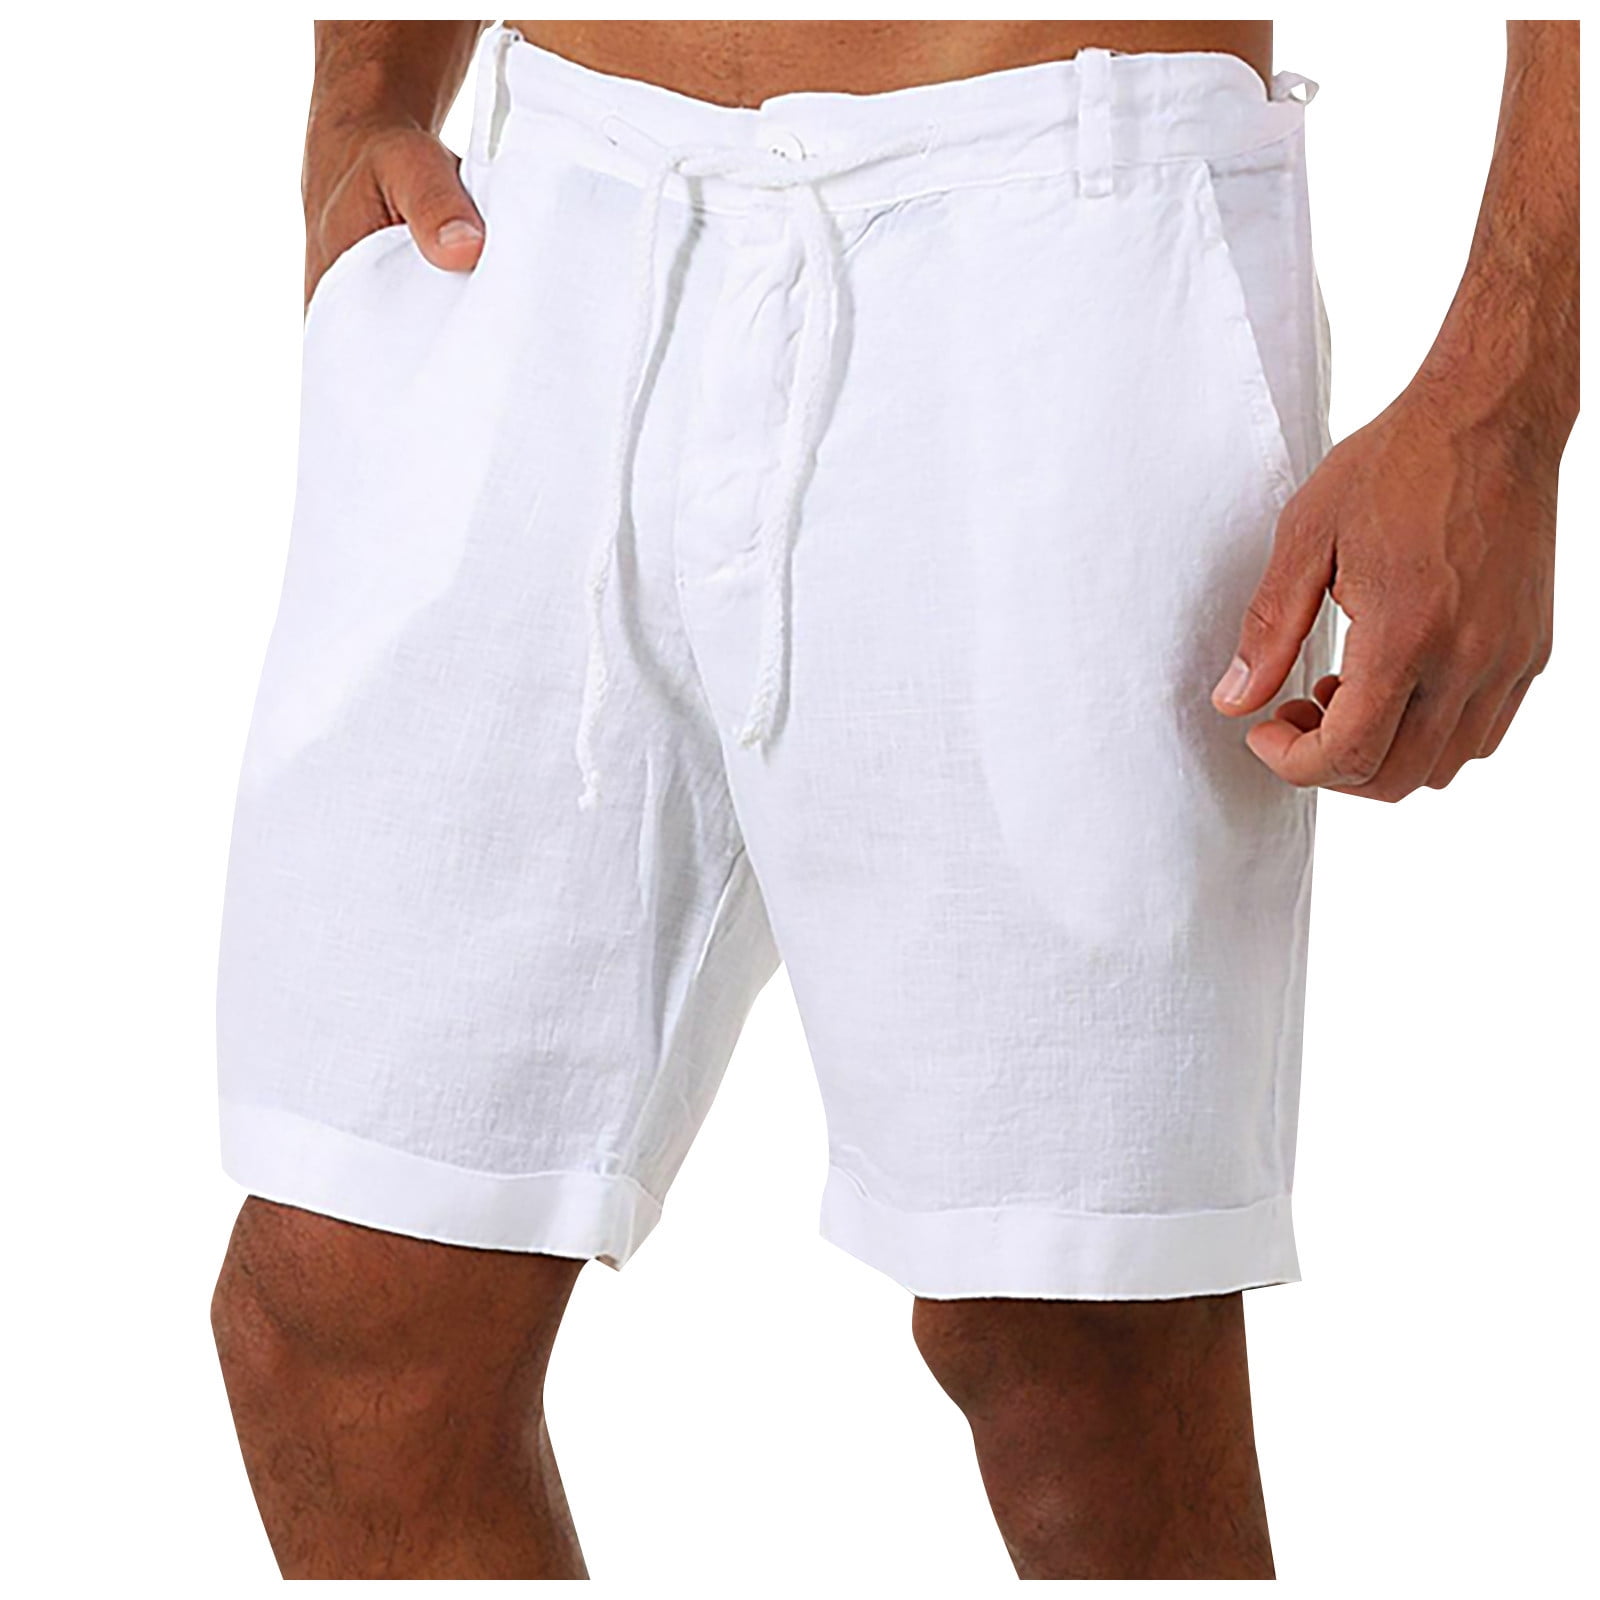 Mens Big and Tall Linen Shorts,Men's Cotton Shorts Casual Athletic ...